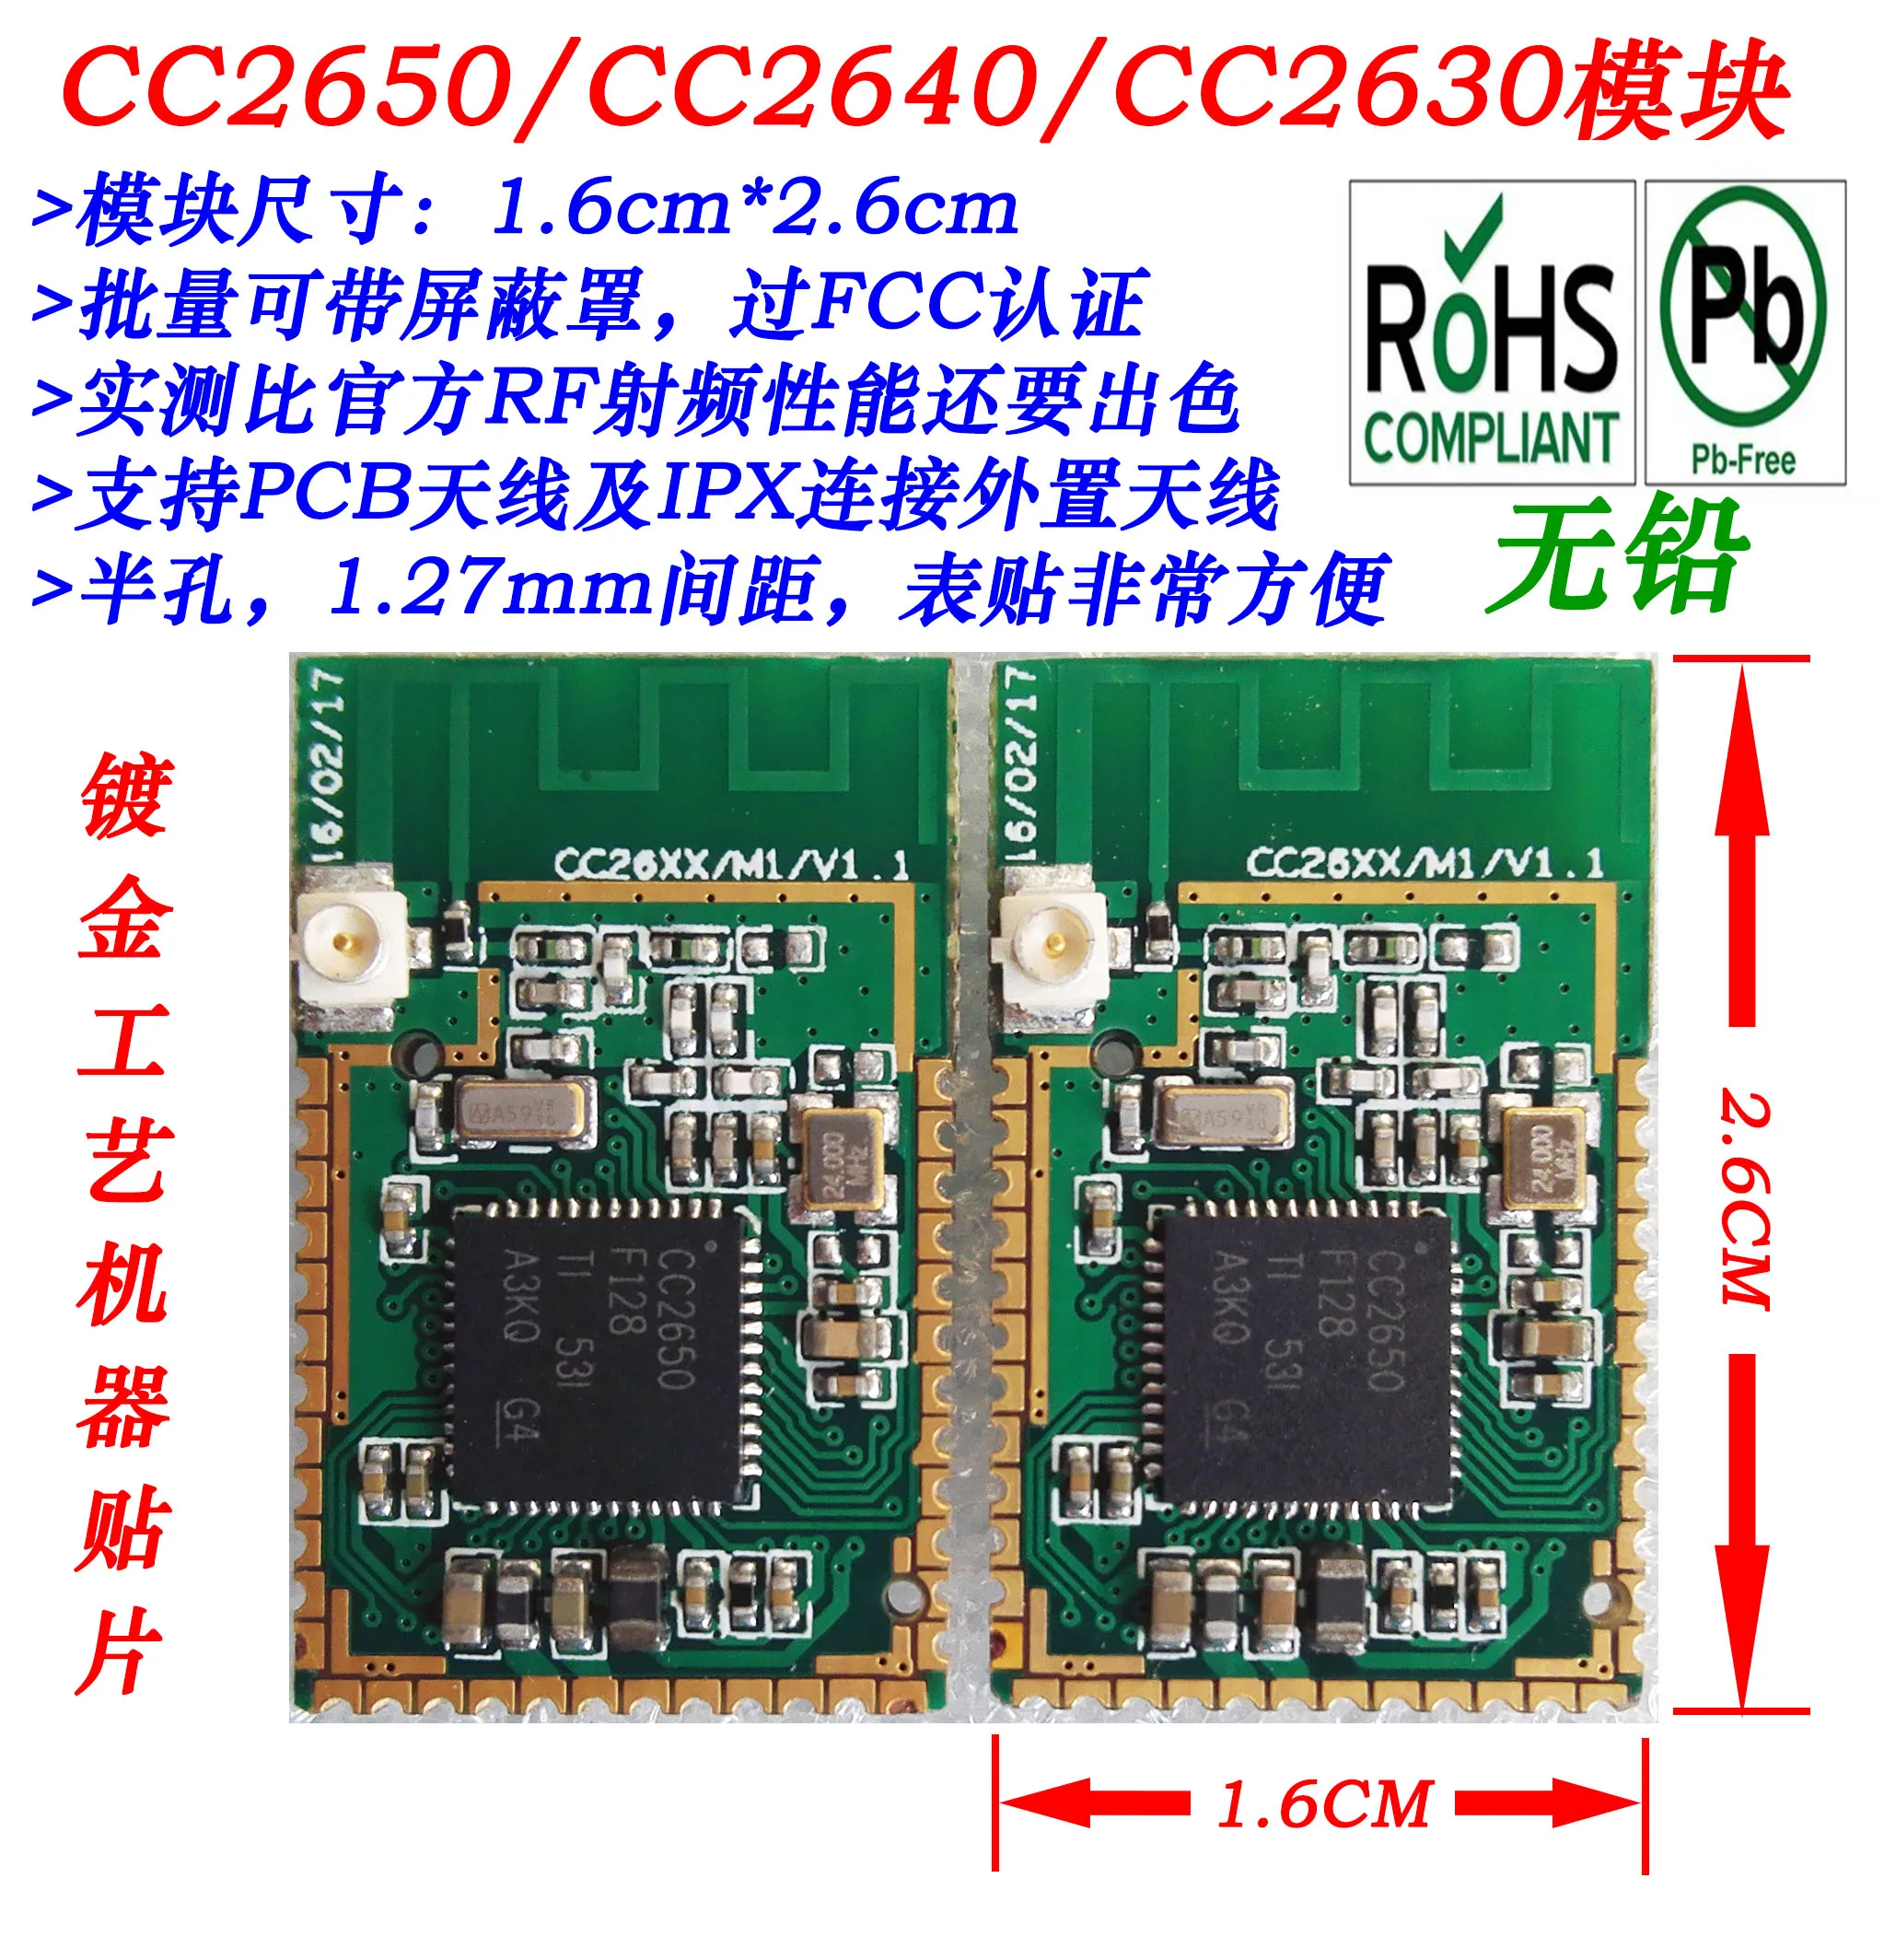 CC2640 CC2630 CC2650 модуль Bluetooth, ZigBee модуль, CC2640 модуль